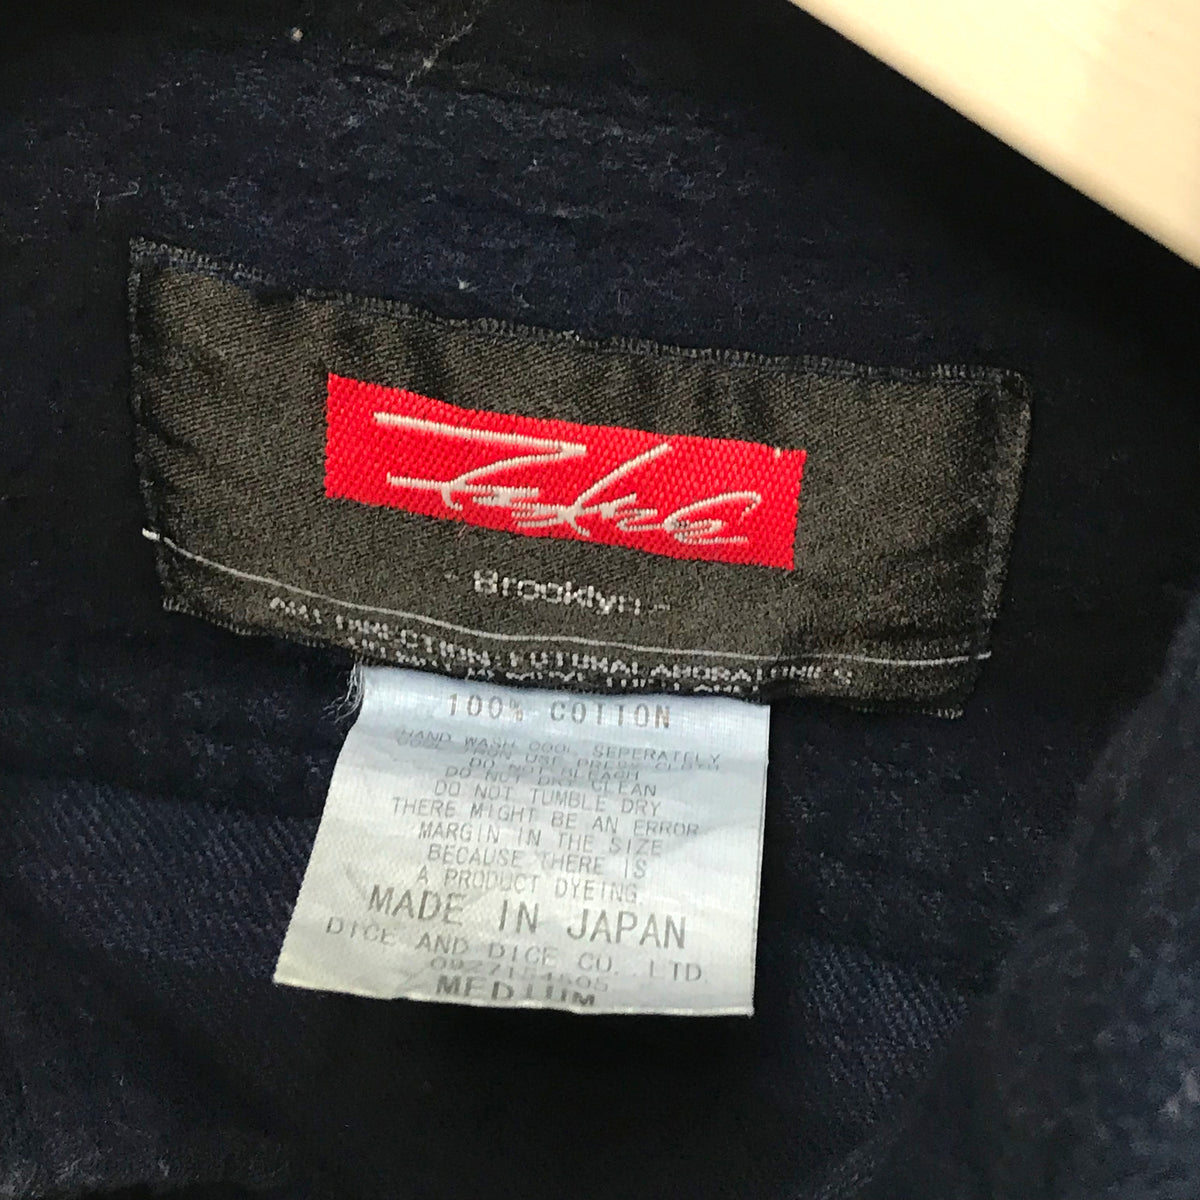 [M] Futura Laboratories Overdye Flannel Check Shirt Indigo ...